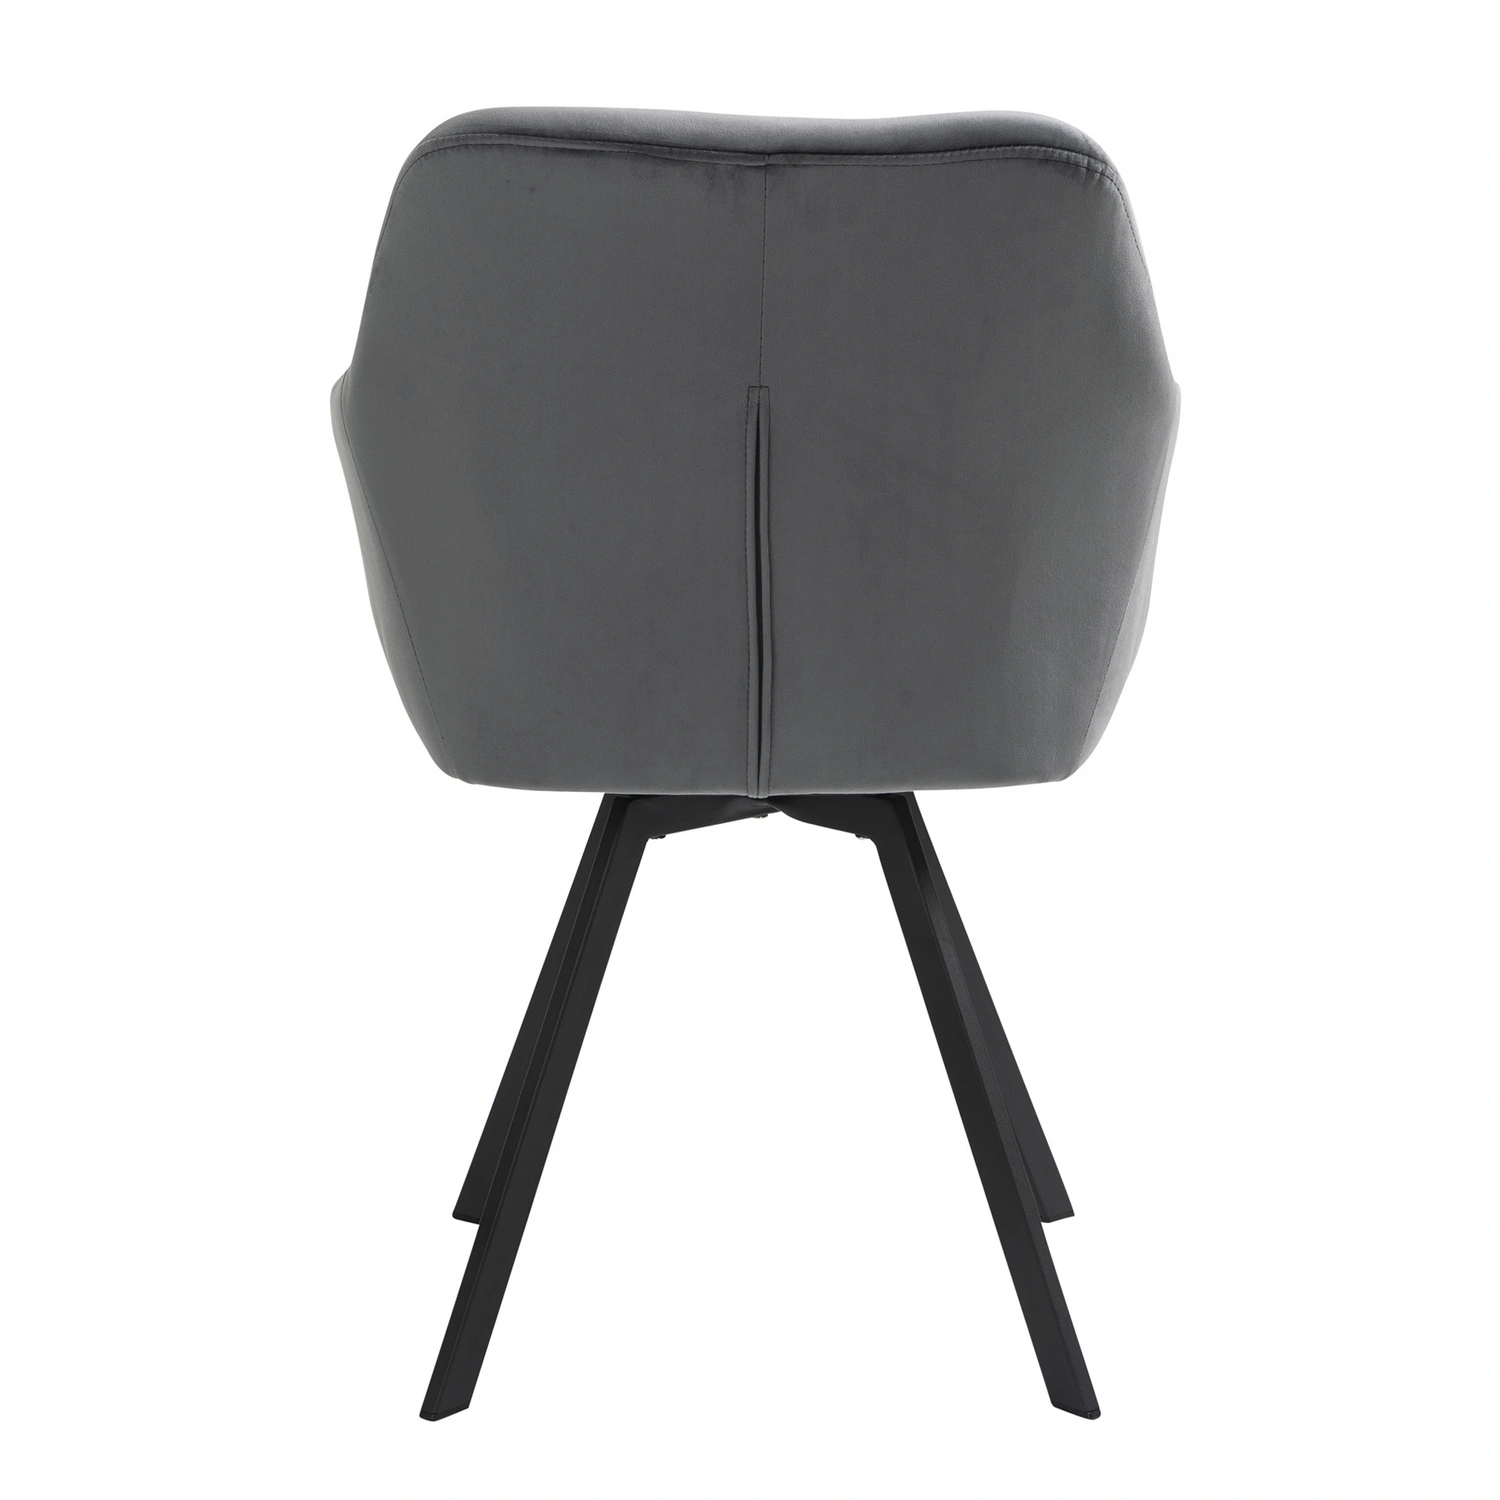 SalesFever Höhe: cm, grau/schwarz Stuhl, 85